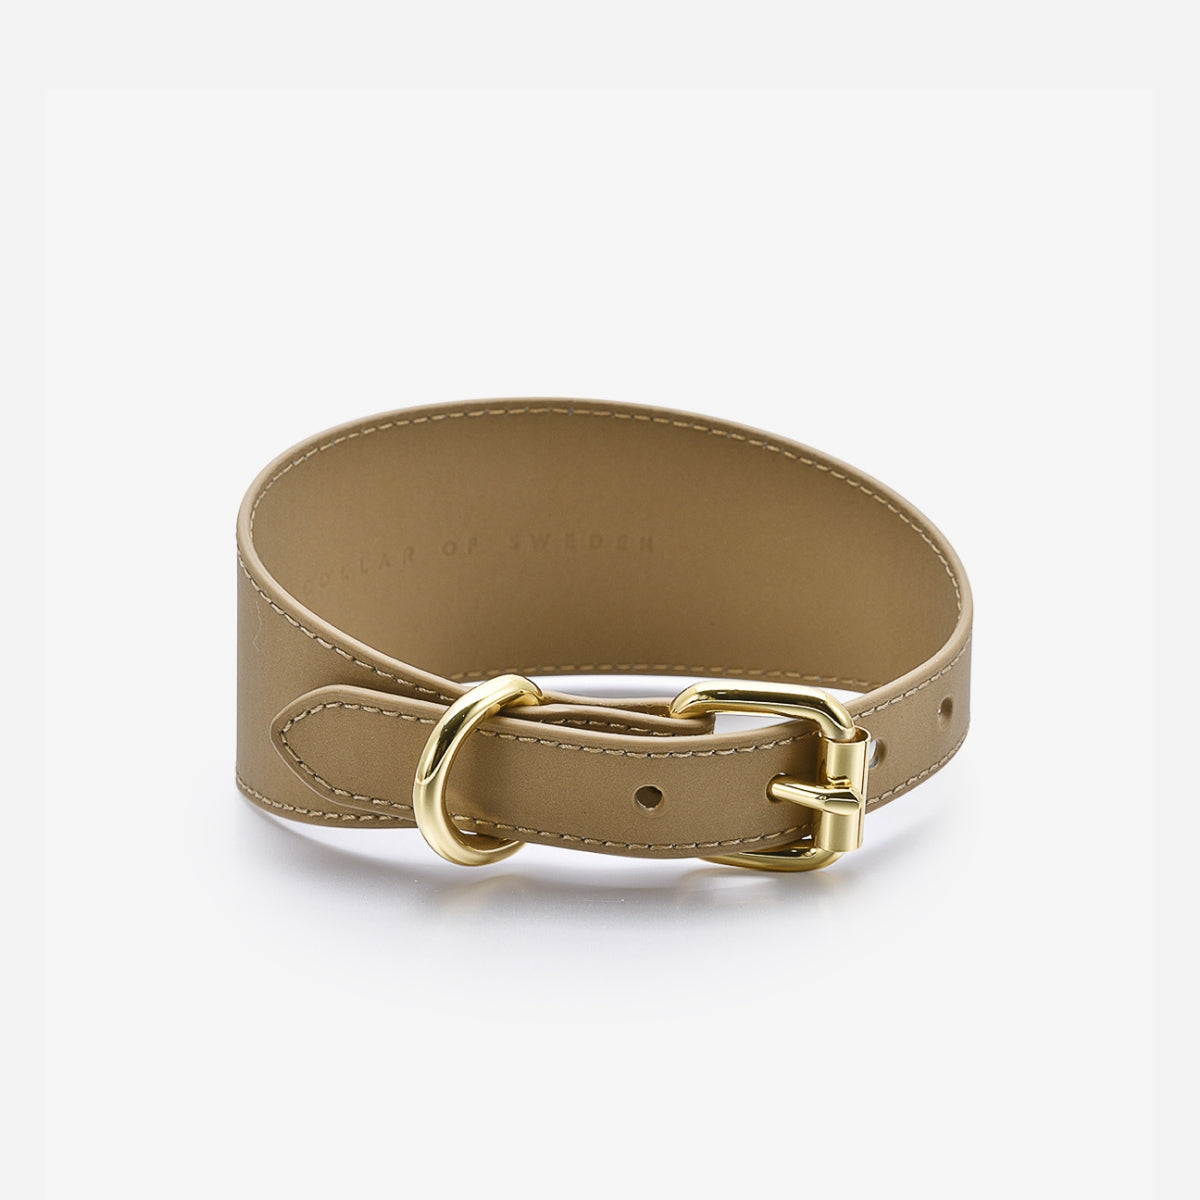 reflective-bronze-dog-collar-medium-wide-buckle.jpg